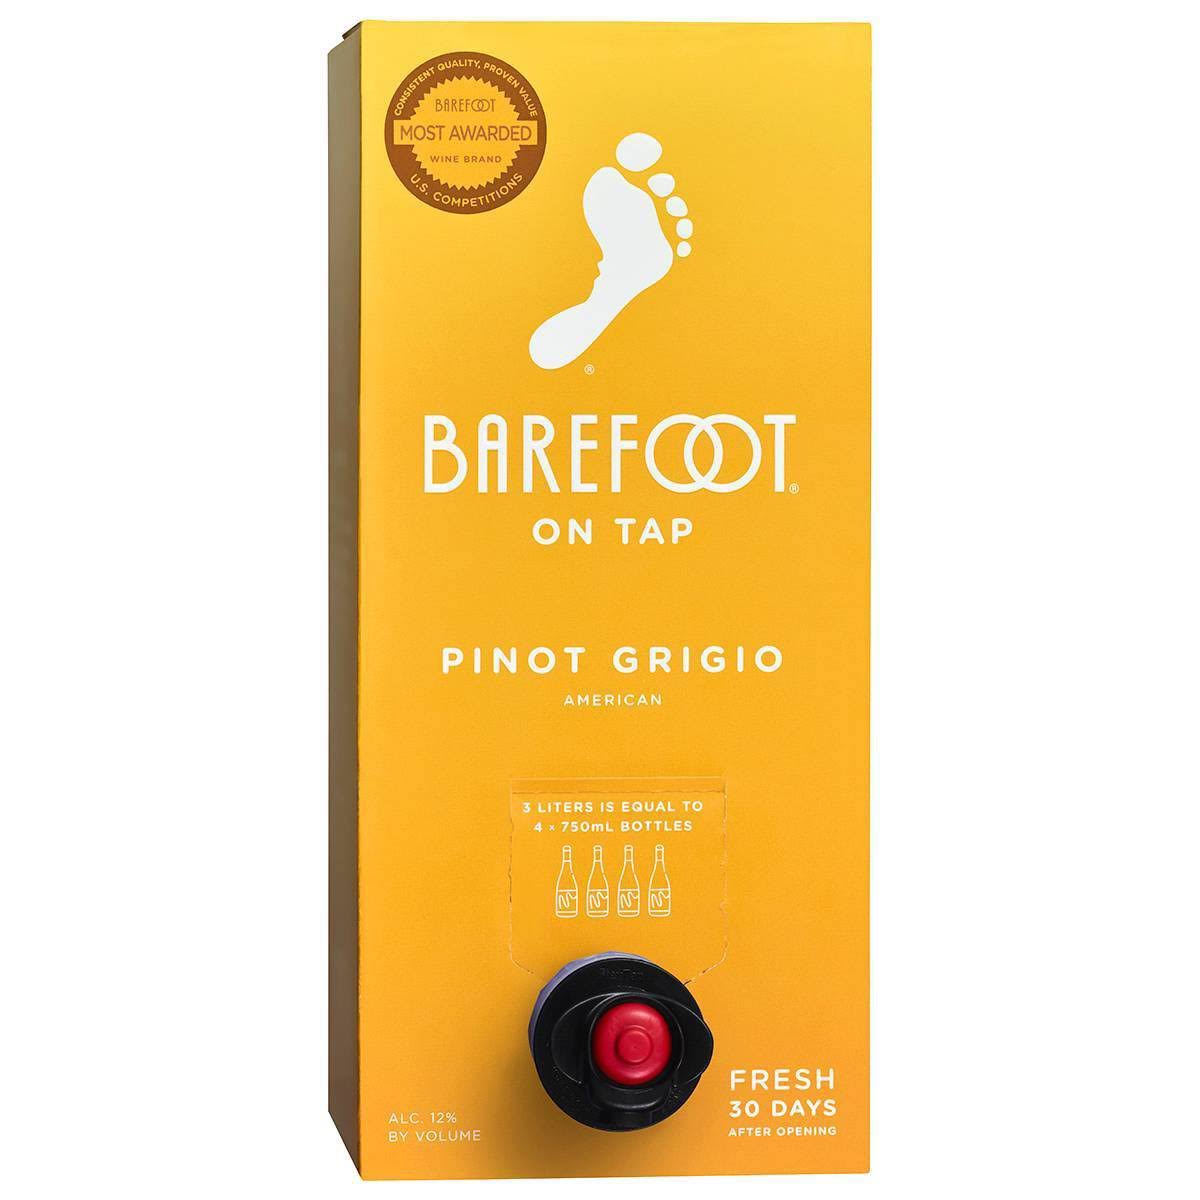 Barefoot On Tap Pinot Grigio, American - 3 liters